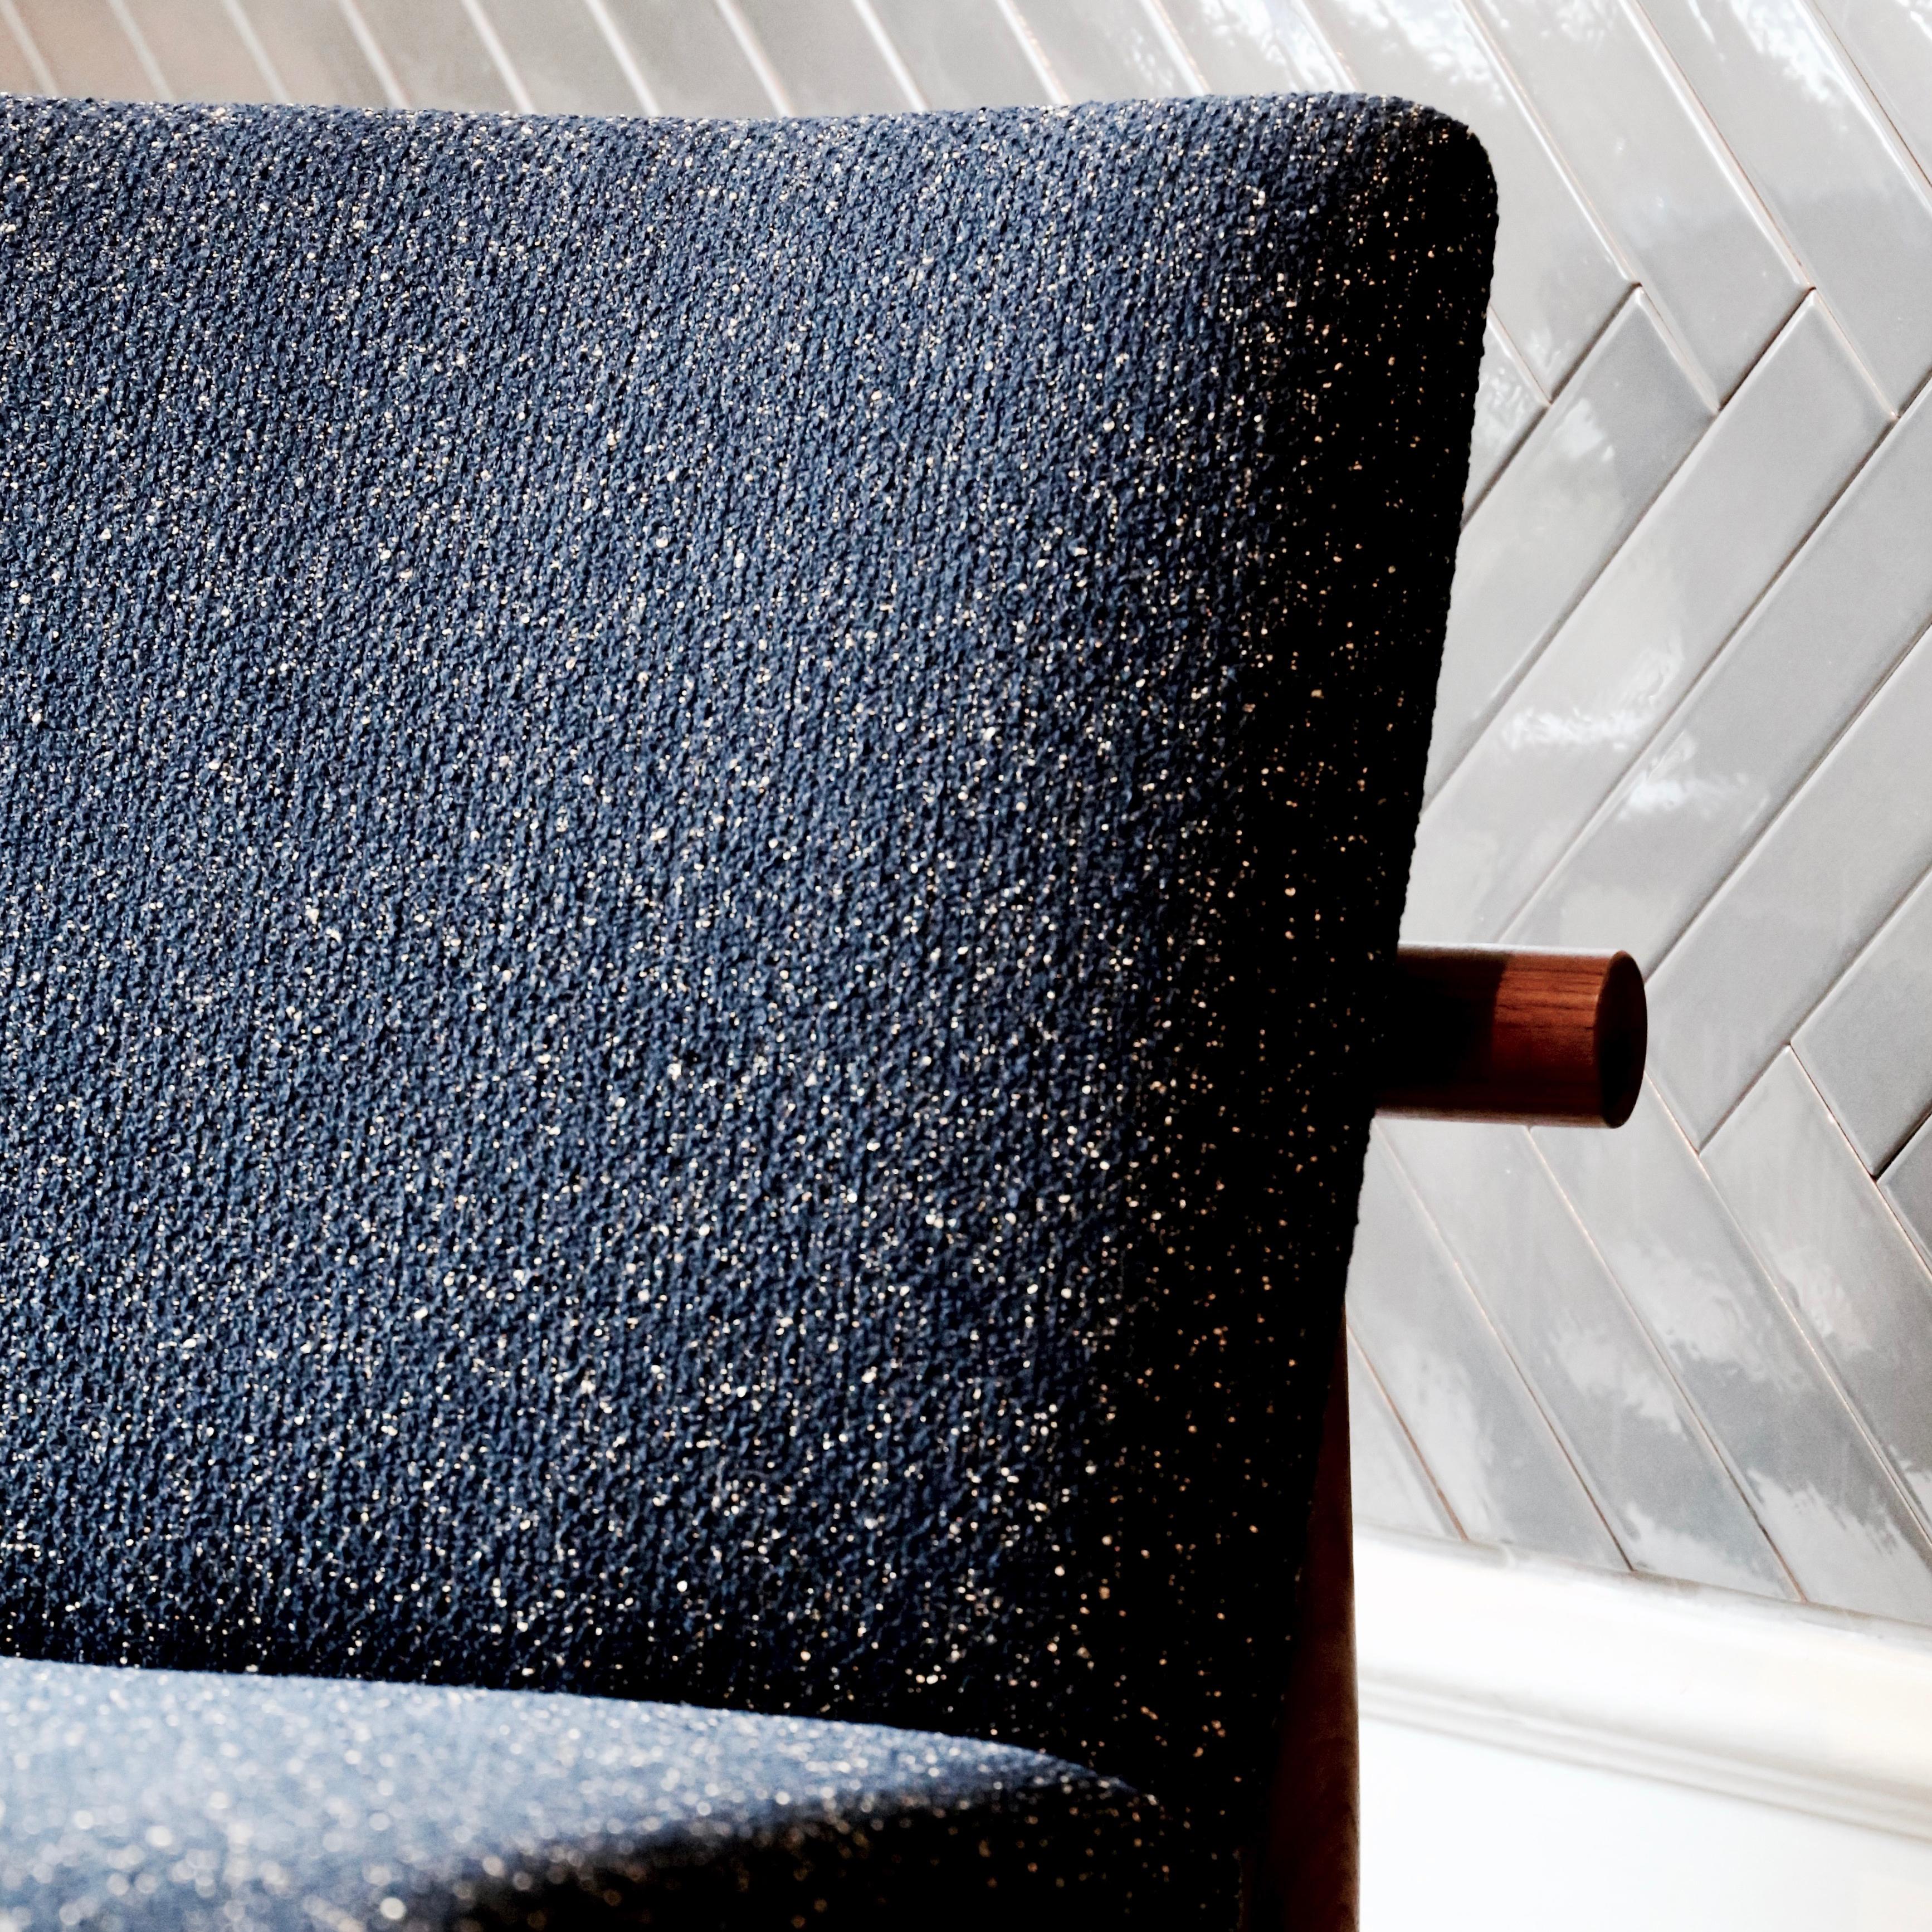 Finn Juhl Japan Series Two-Seaters Sofa, Wood and Raf Simons Fabric 1